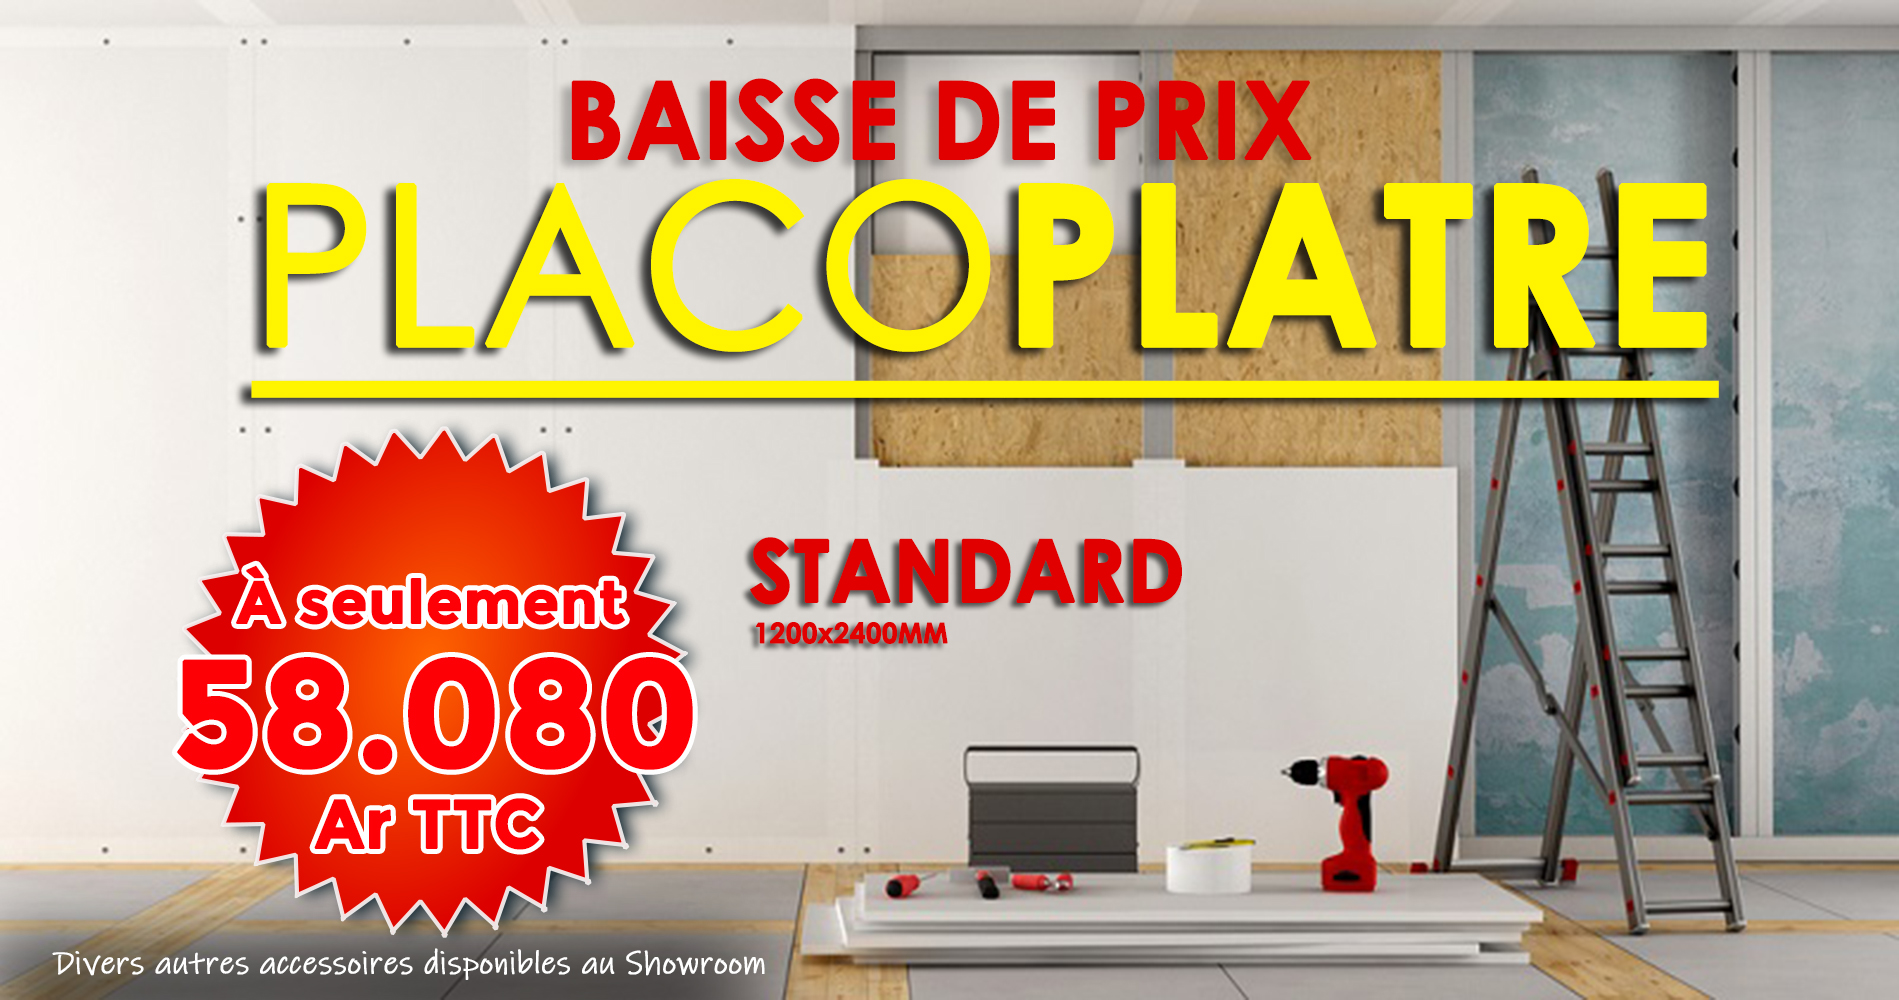 PLACOPLATRE STANDARD BA13 (1200X2400) PROMOTION